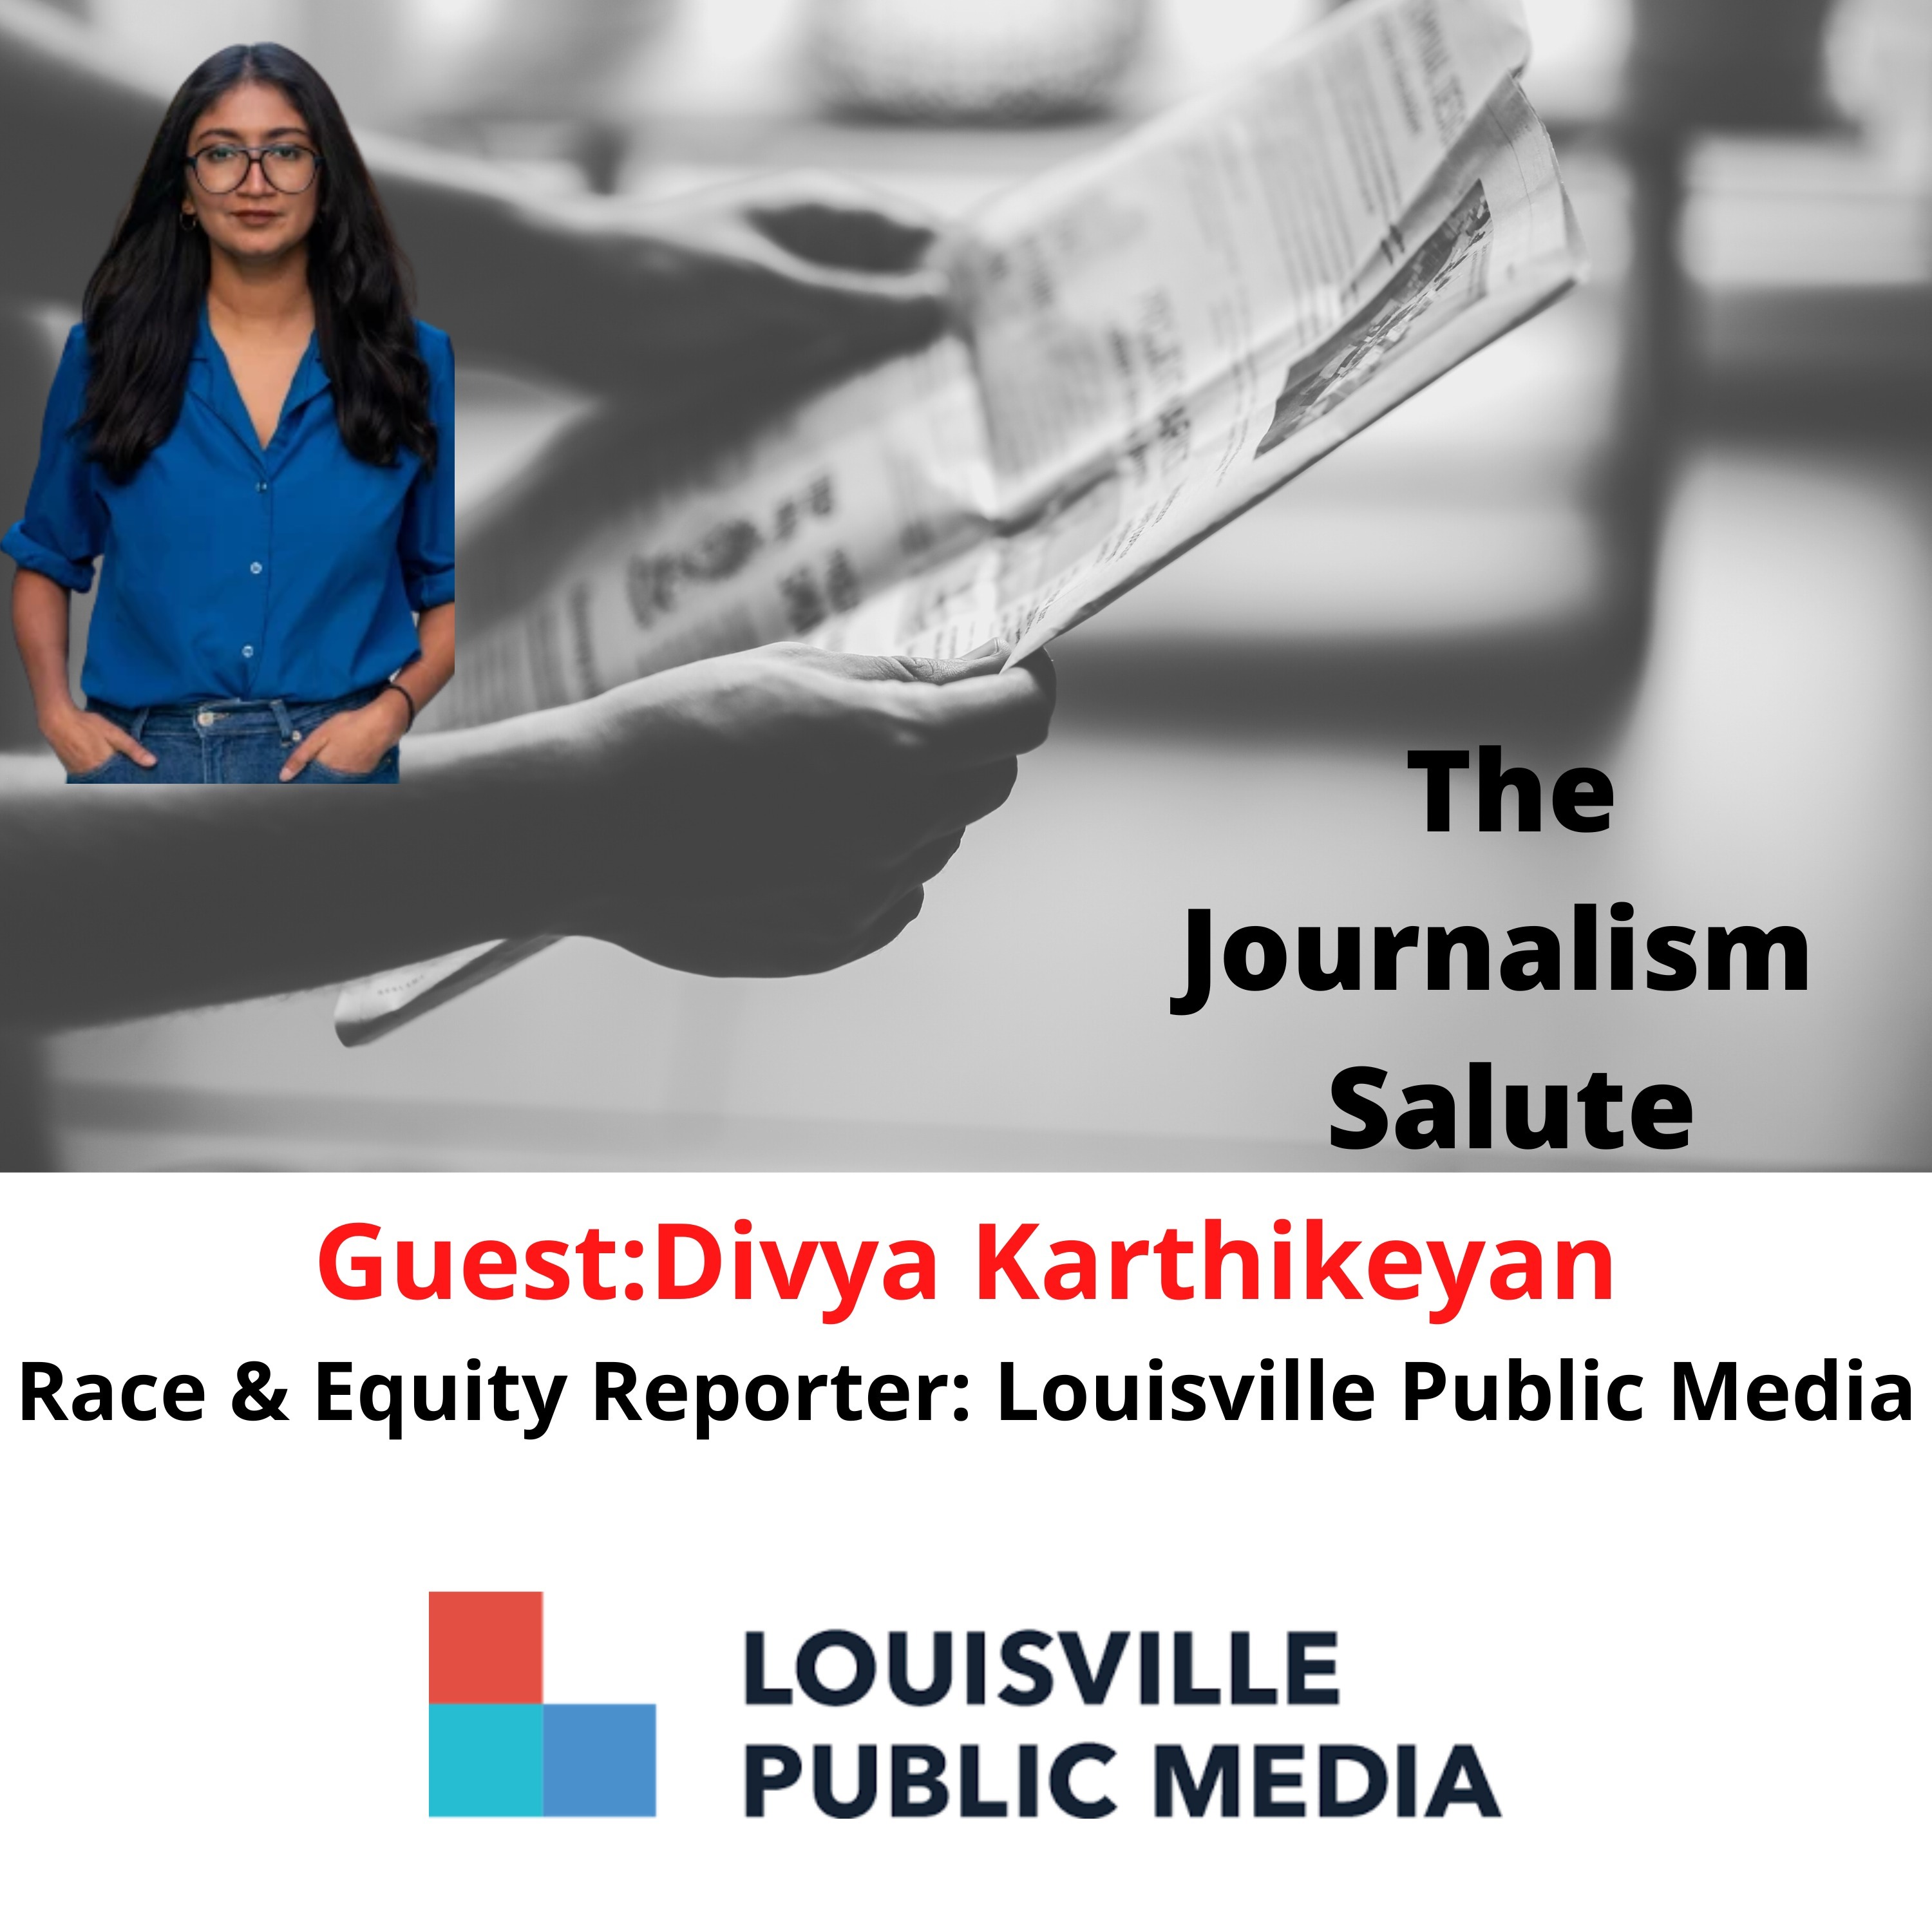 Divya Karthikeyan, Race & Equity Reporter: Louisville Public Media